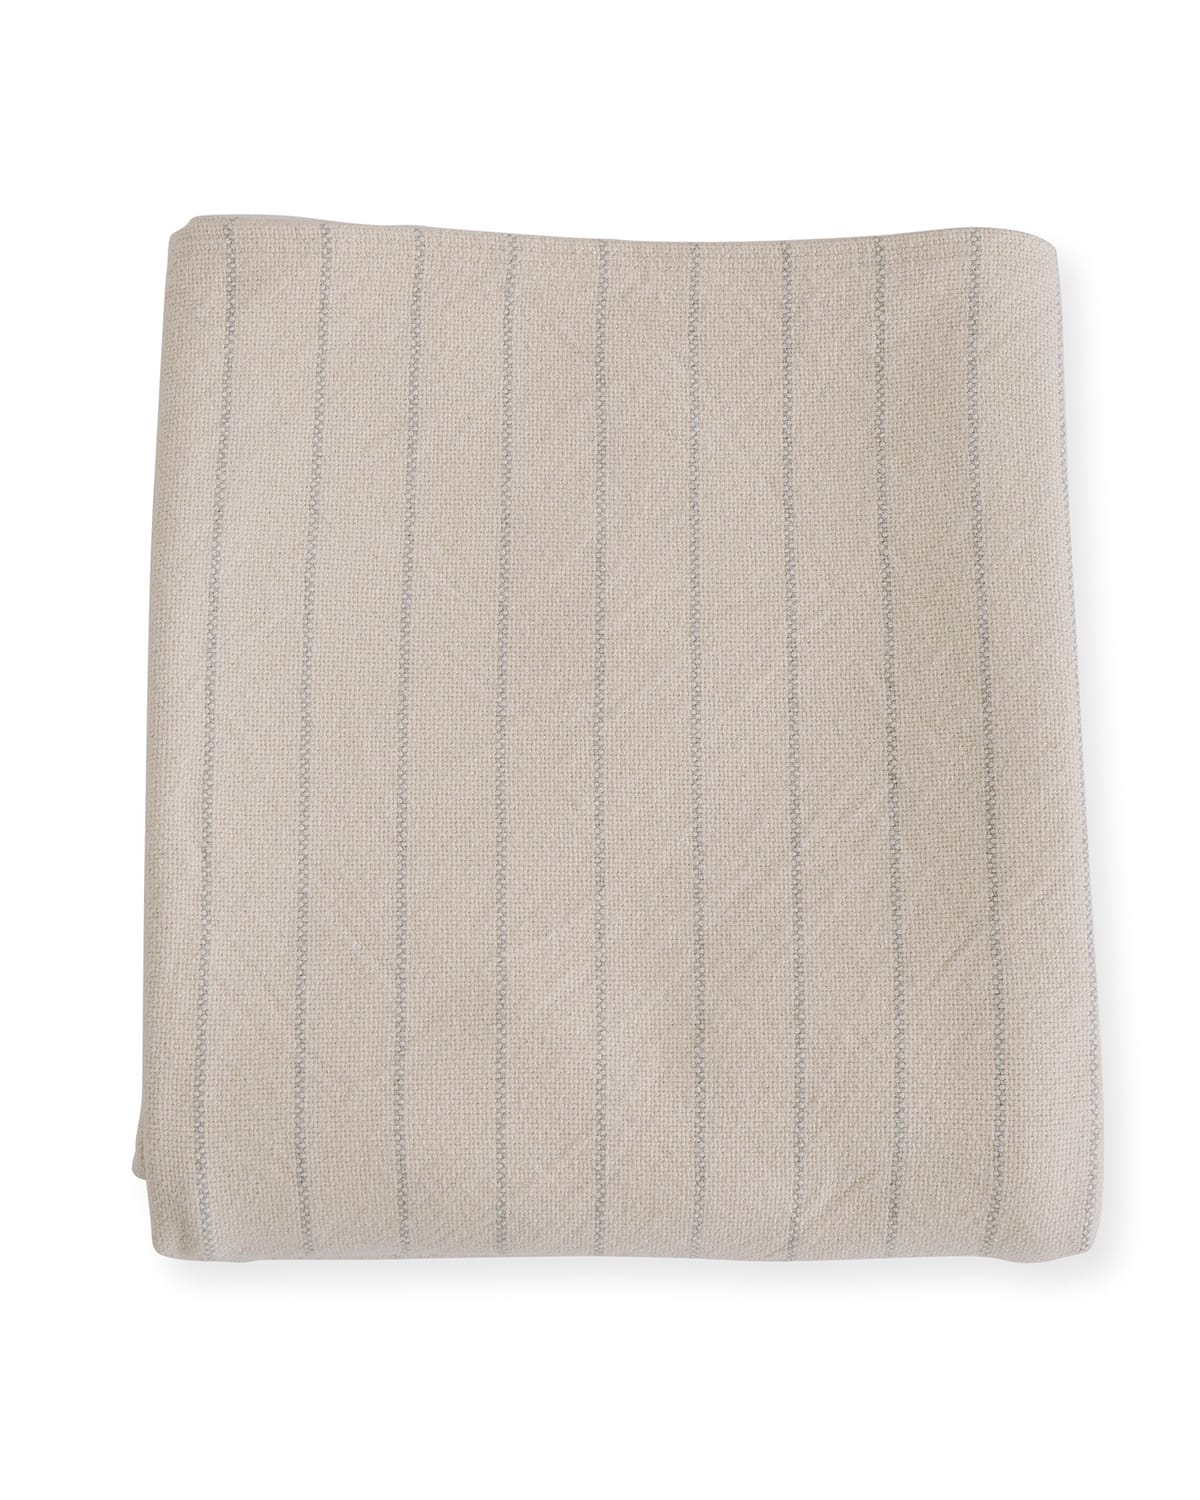 Evangeline Linens Pinstripe Herringbone Cotton Blanket, Classic Gray In Neutral